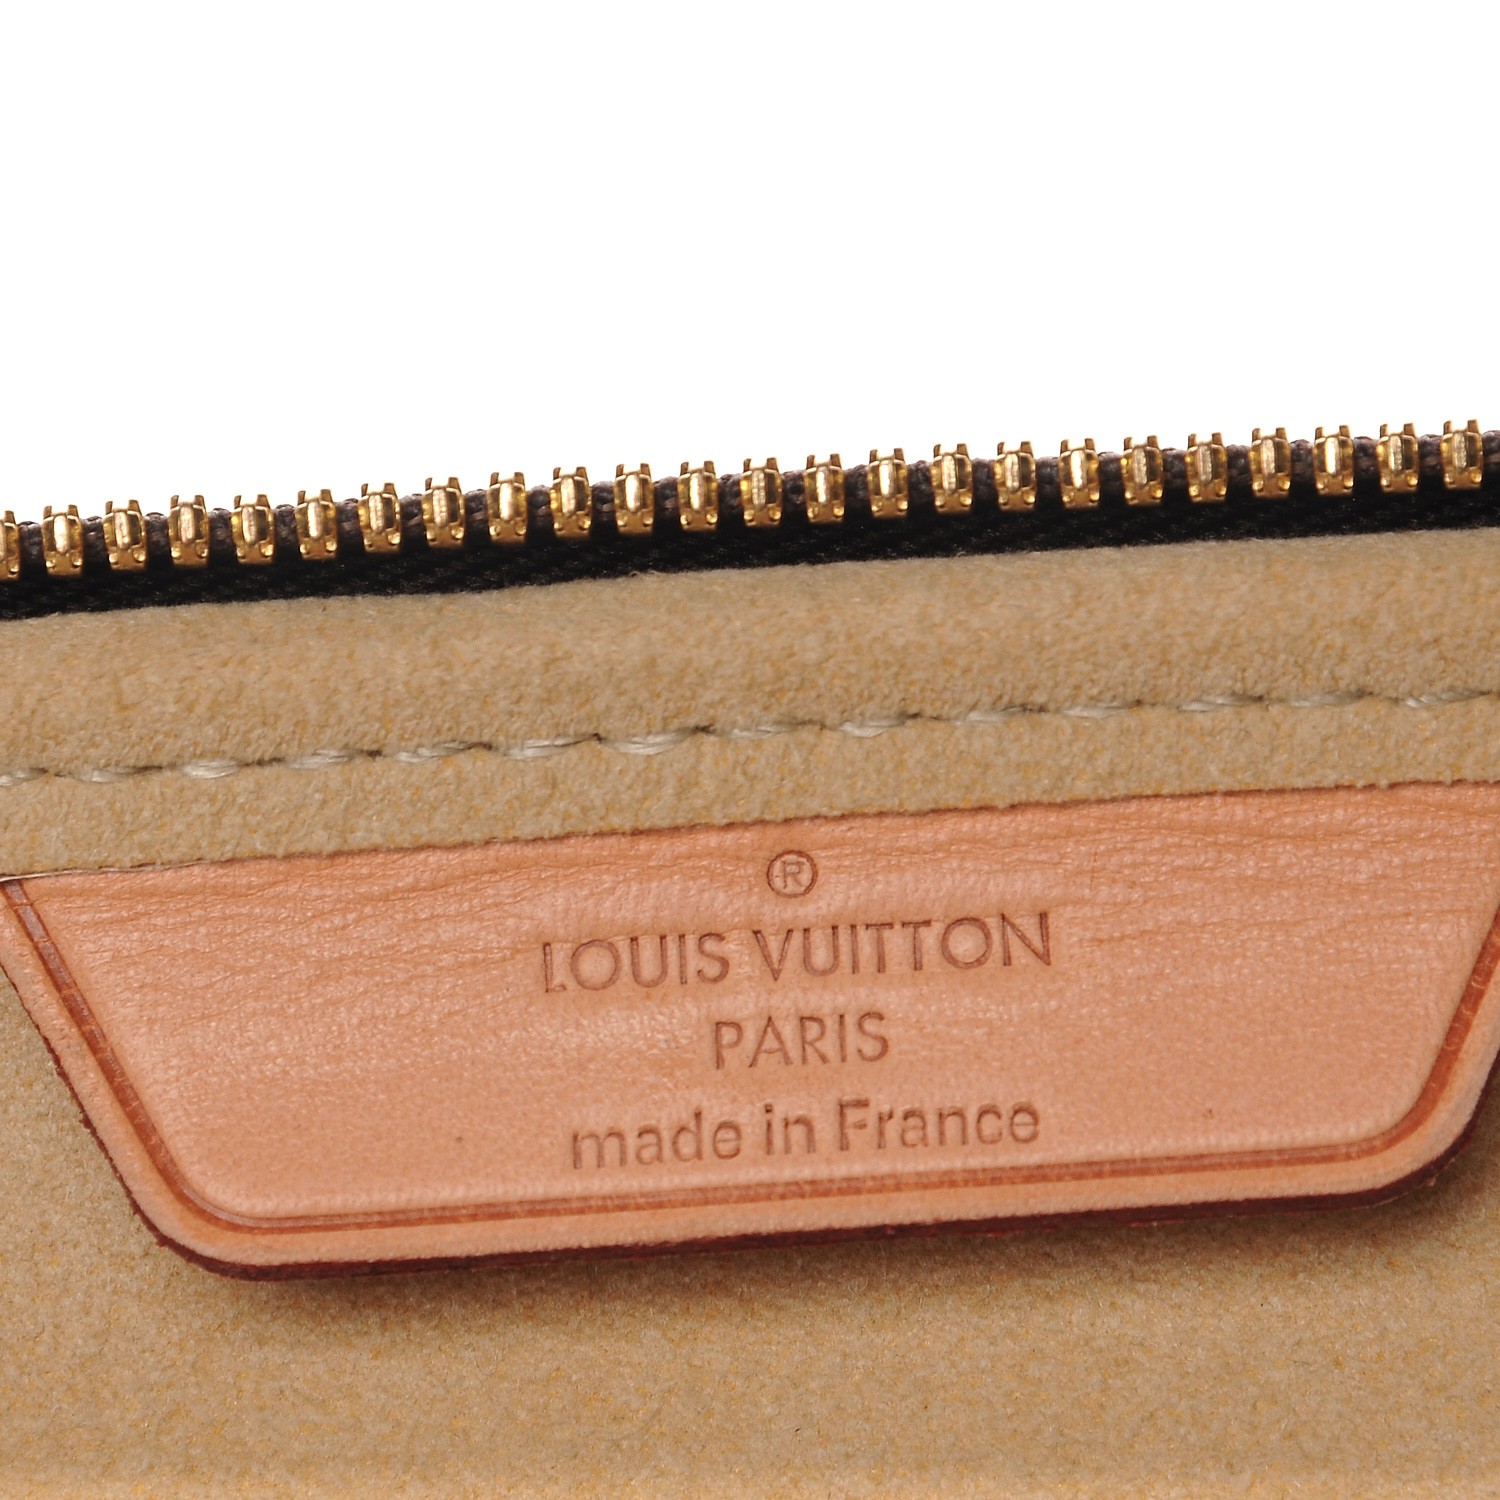 LOUIS VUITTON Monogram 15 Inch Laptop Sleeve 204753